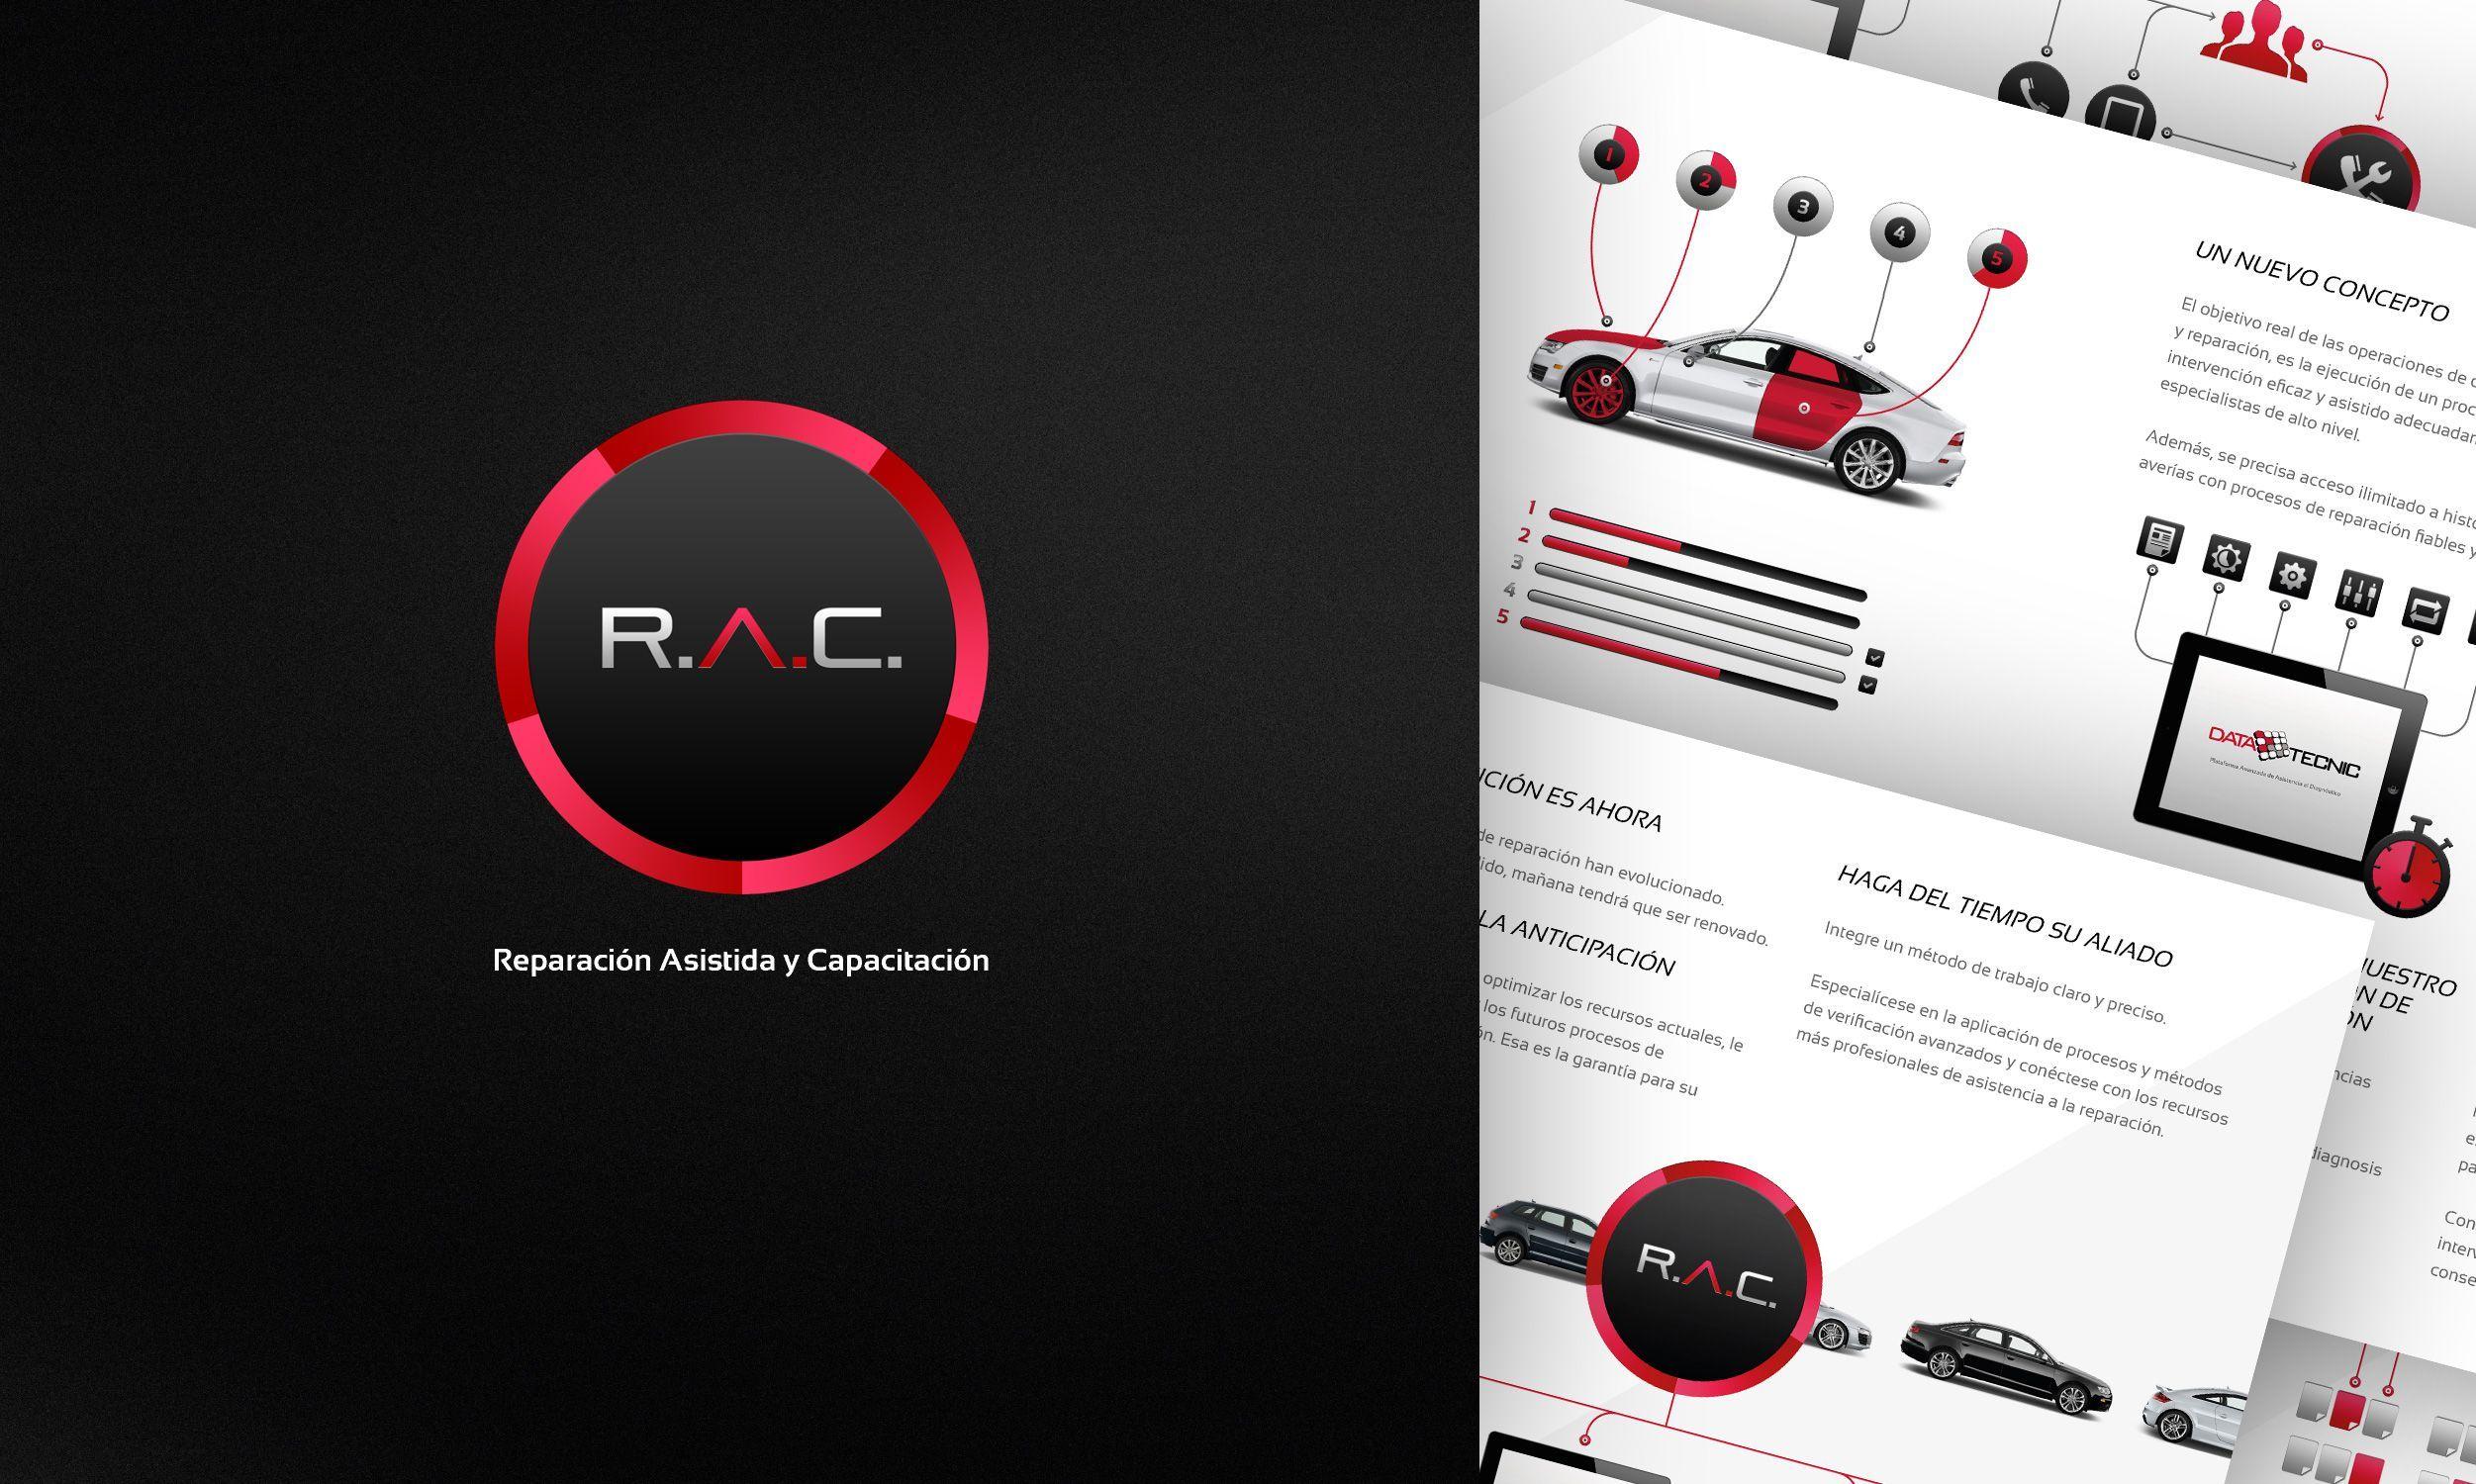 RAC Advertisement Logo - R.A.C. brochure | Advertising & Publishing | Pinterest | Brochures